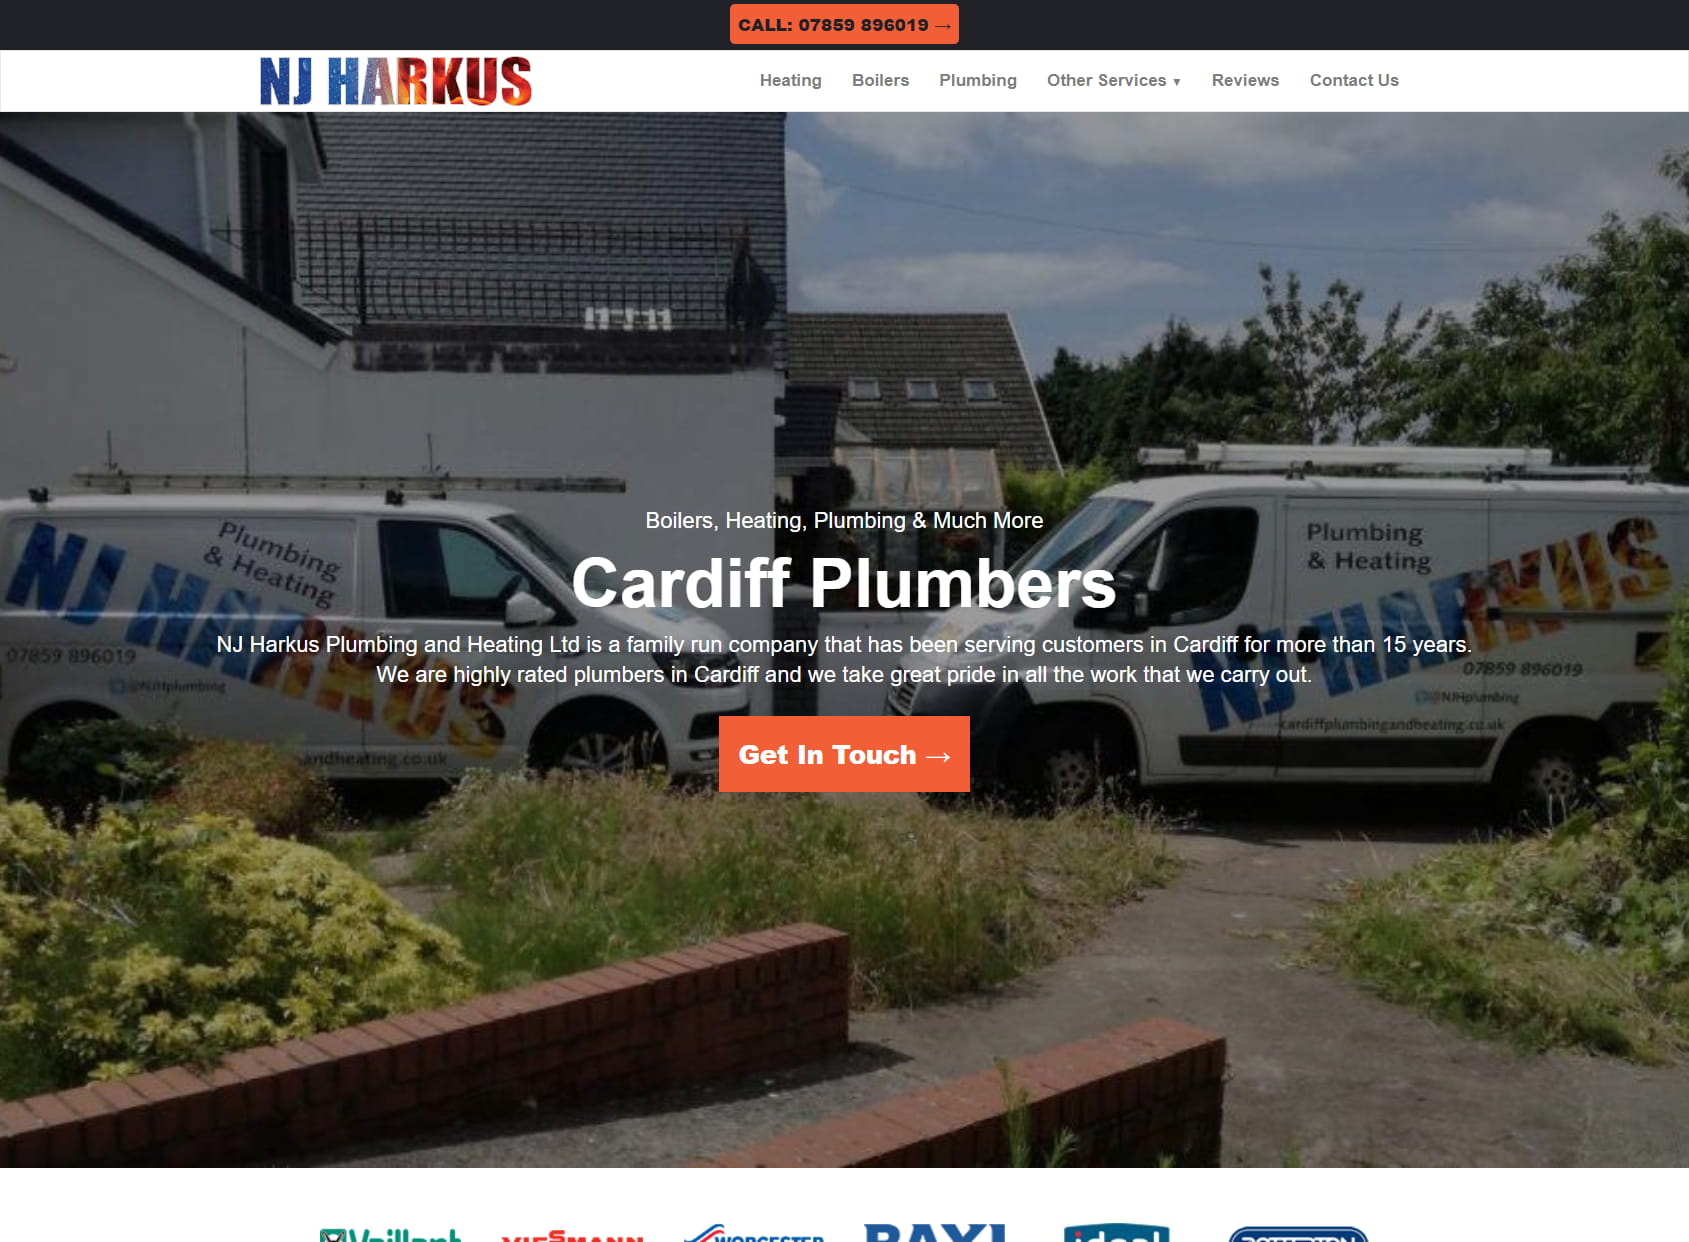 N.J Harkus Plumbing and Heating Ltd